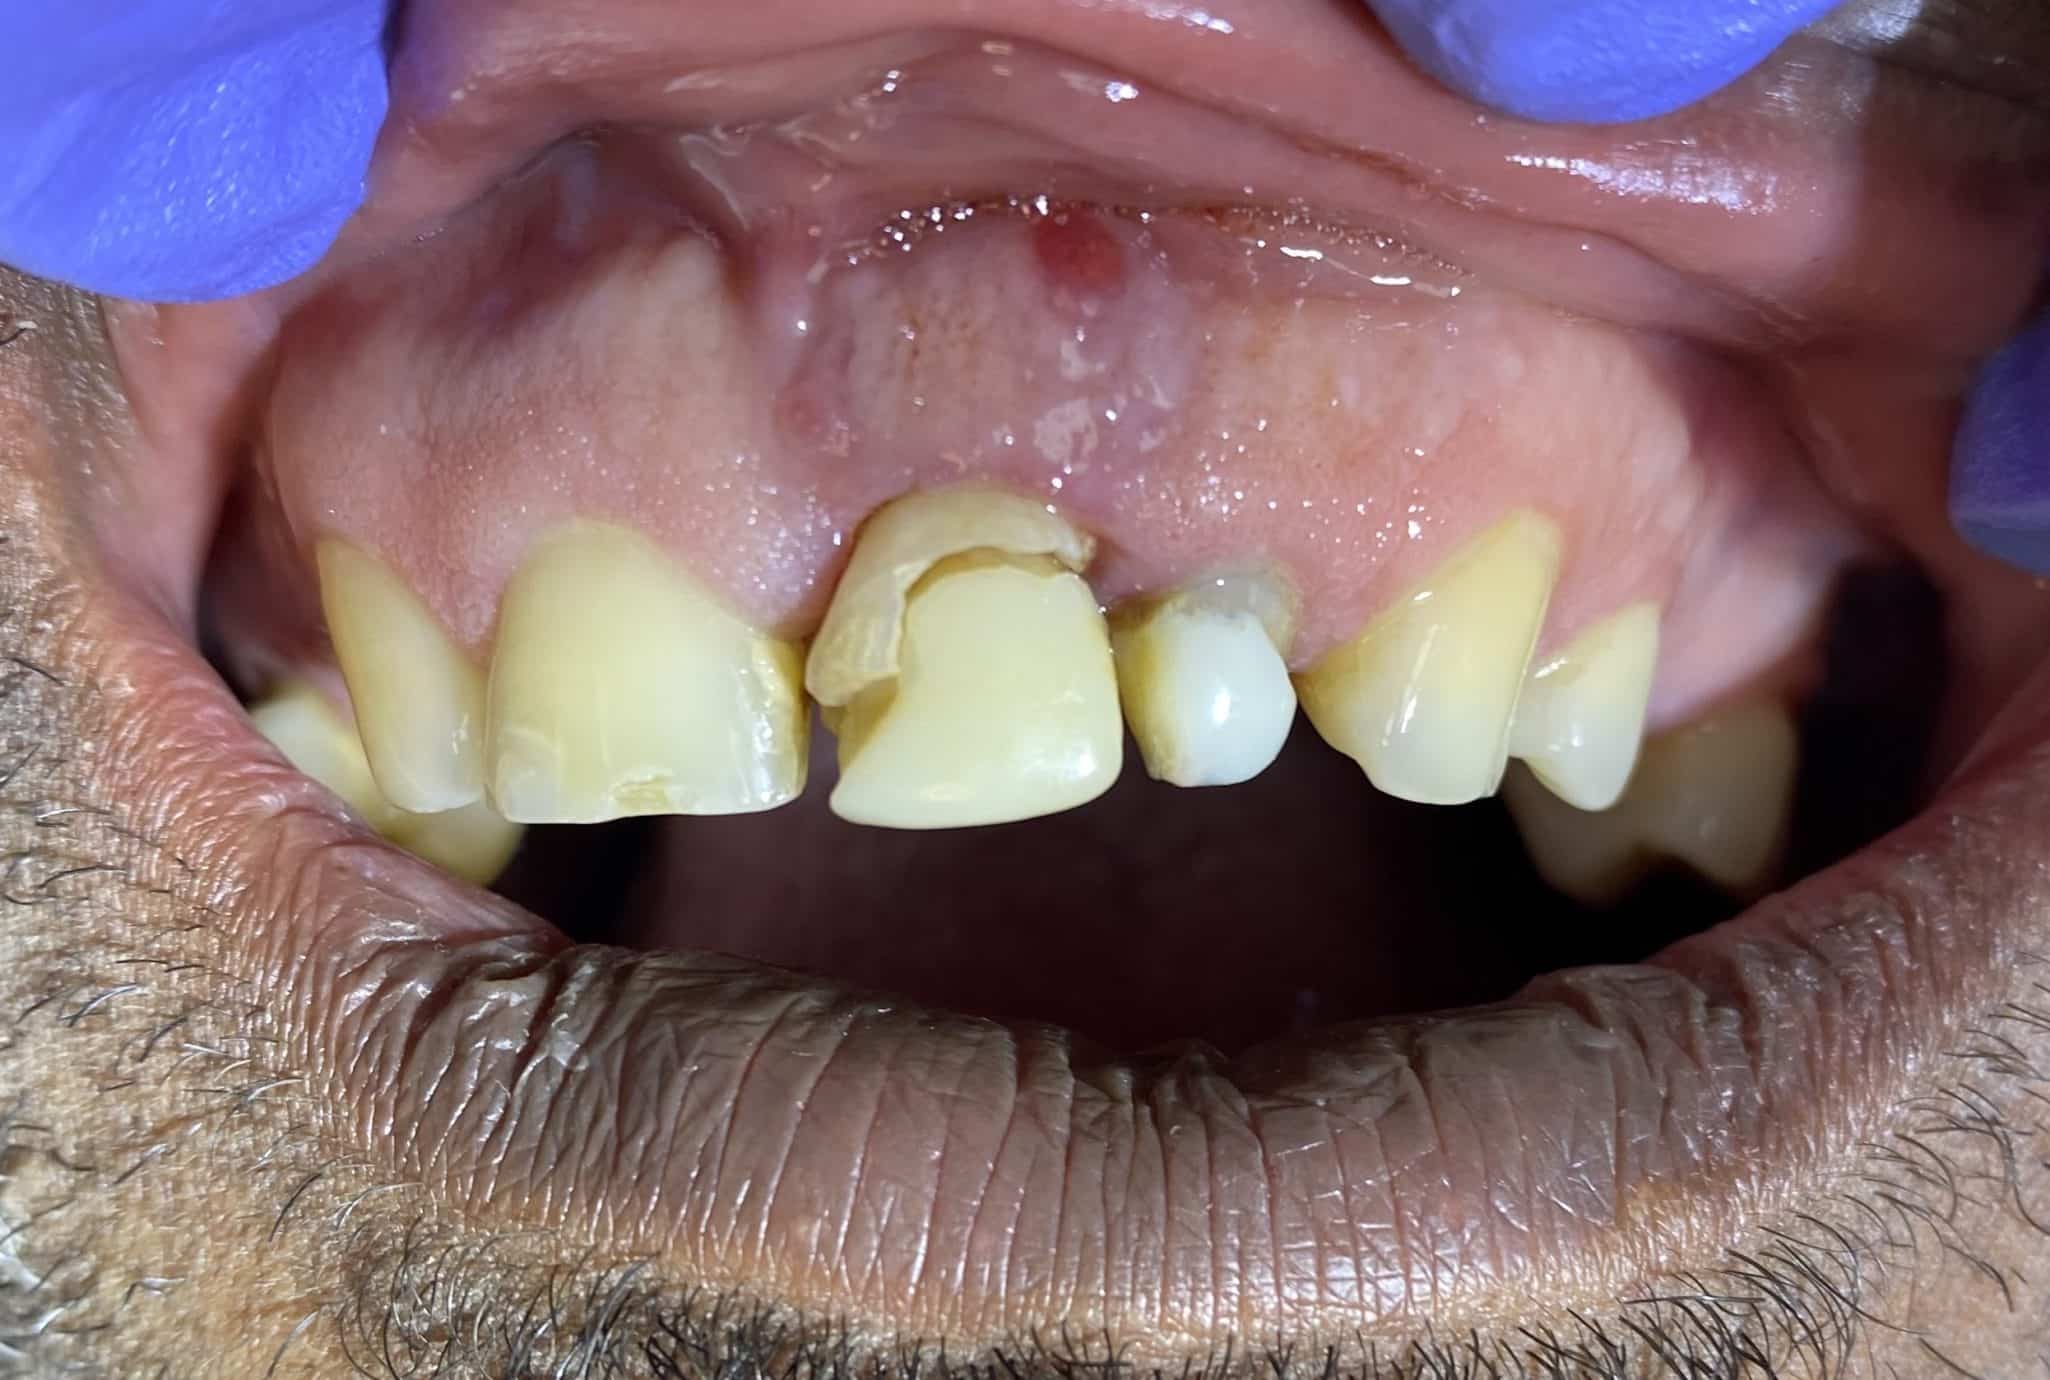 Dental Implants in the Anterior Esthetic Zone